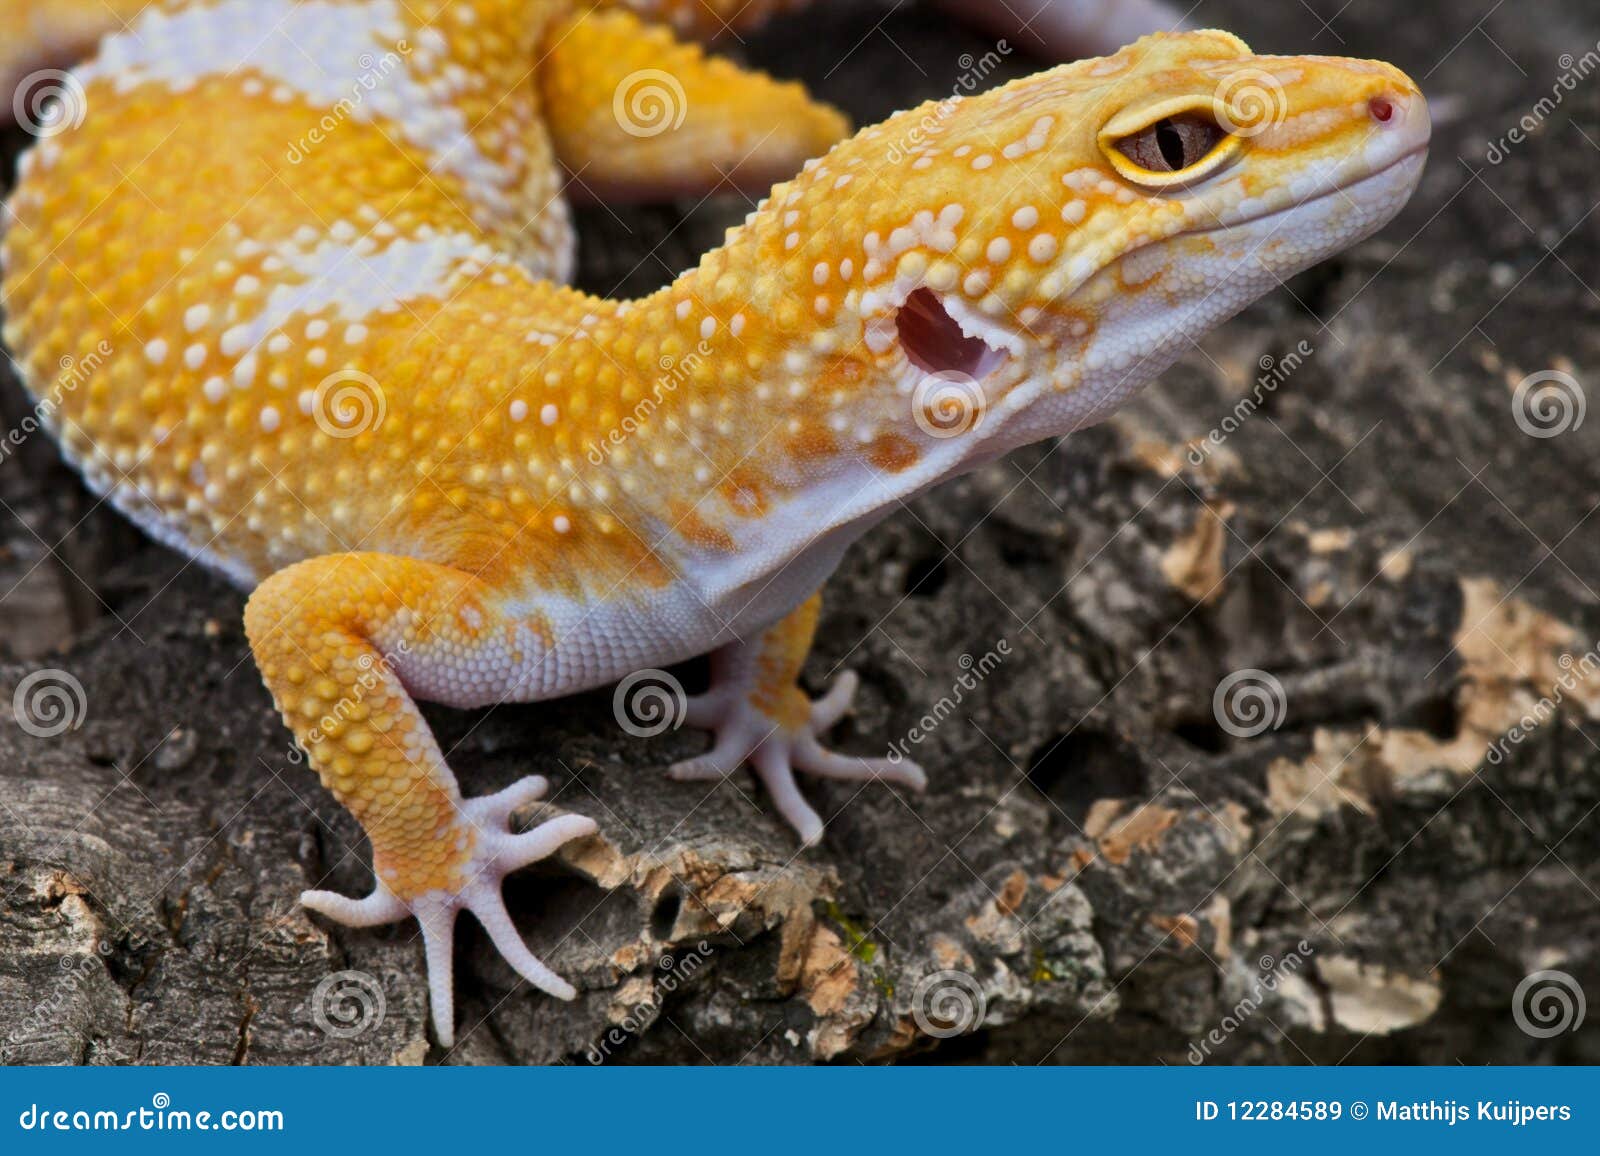 Gecko morph